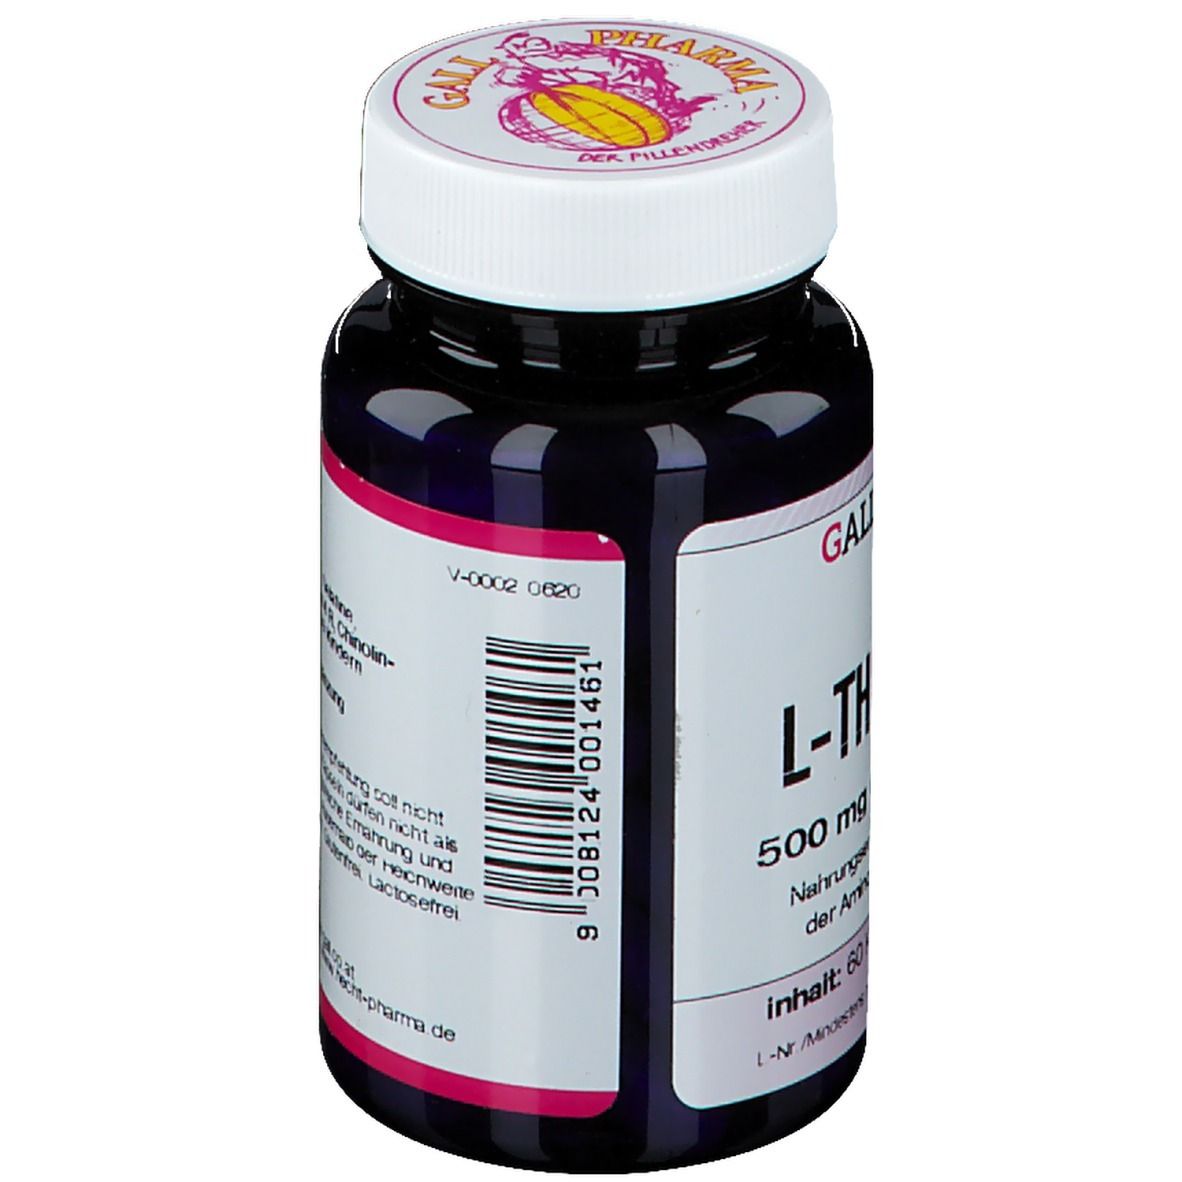 GALL PHARMA L-Threonin 500 mg GPH Kapseln